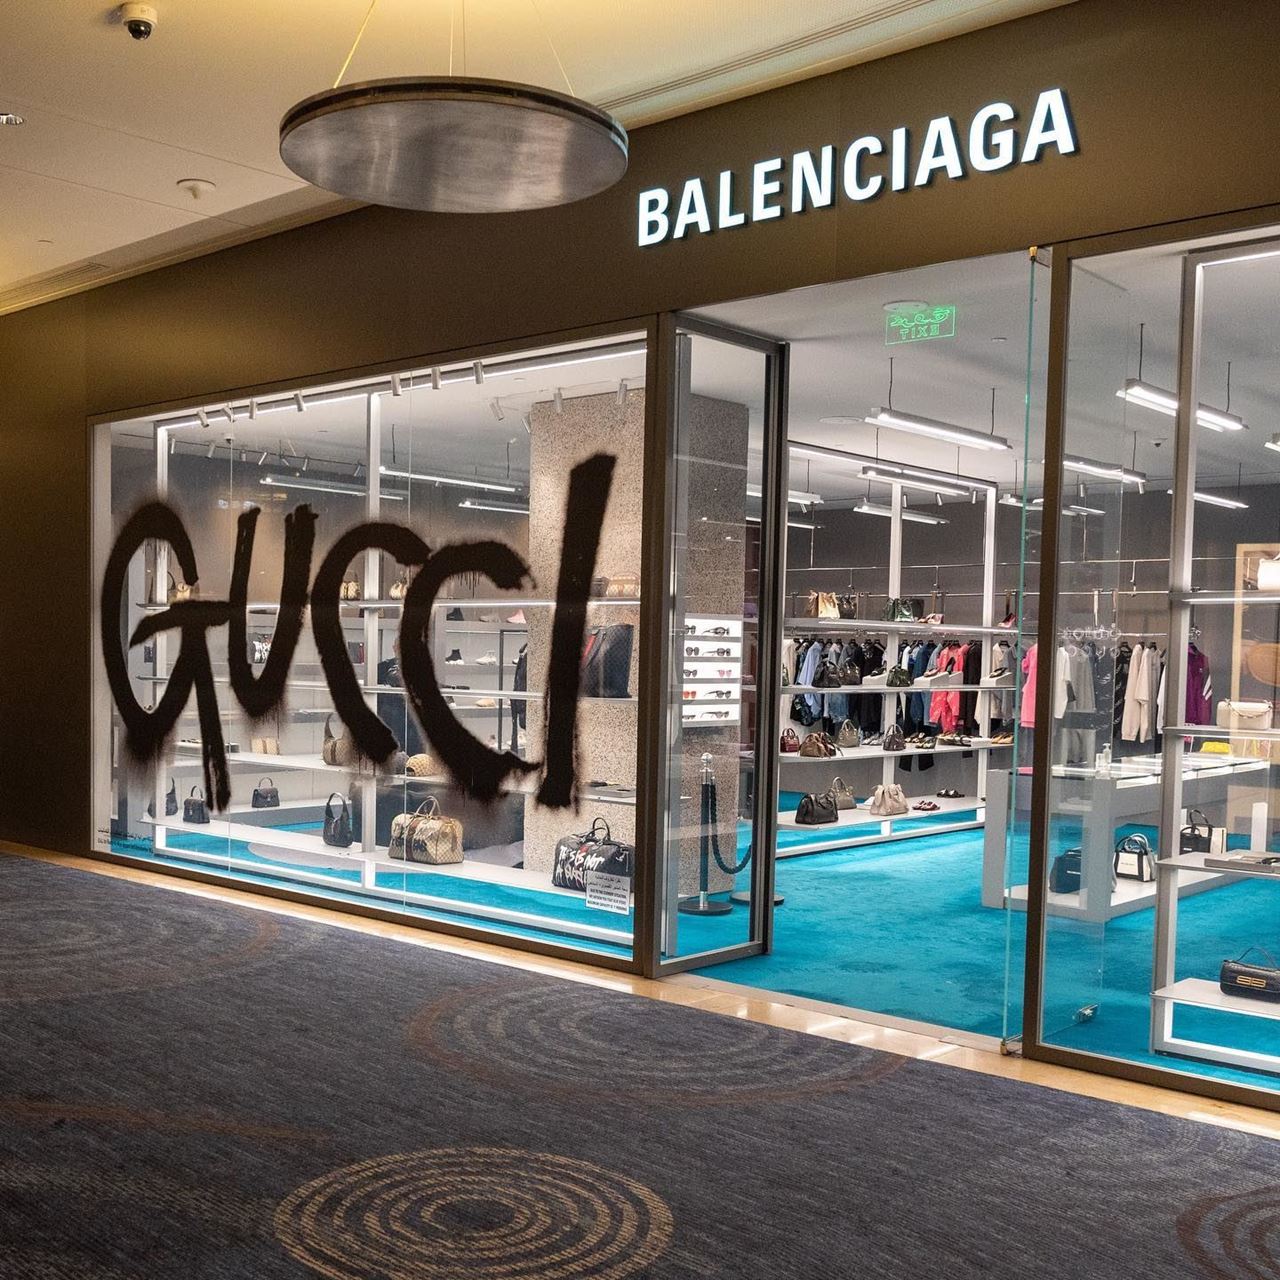 The Hacker Project between Gucci and Balenciaga